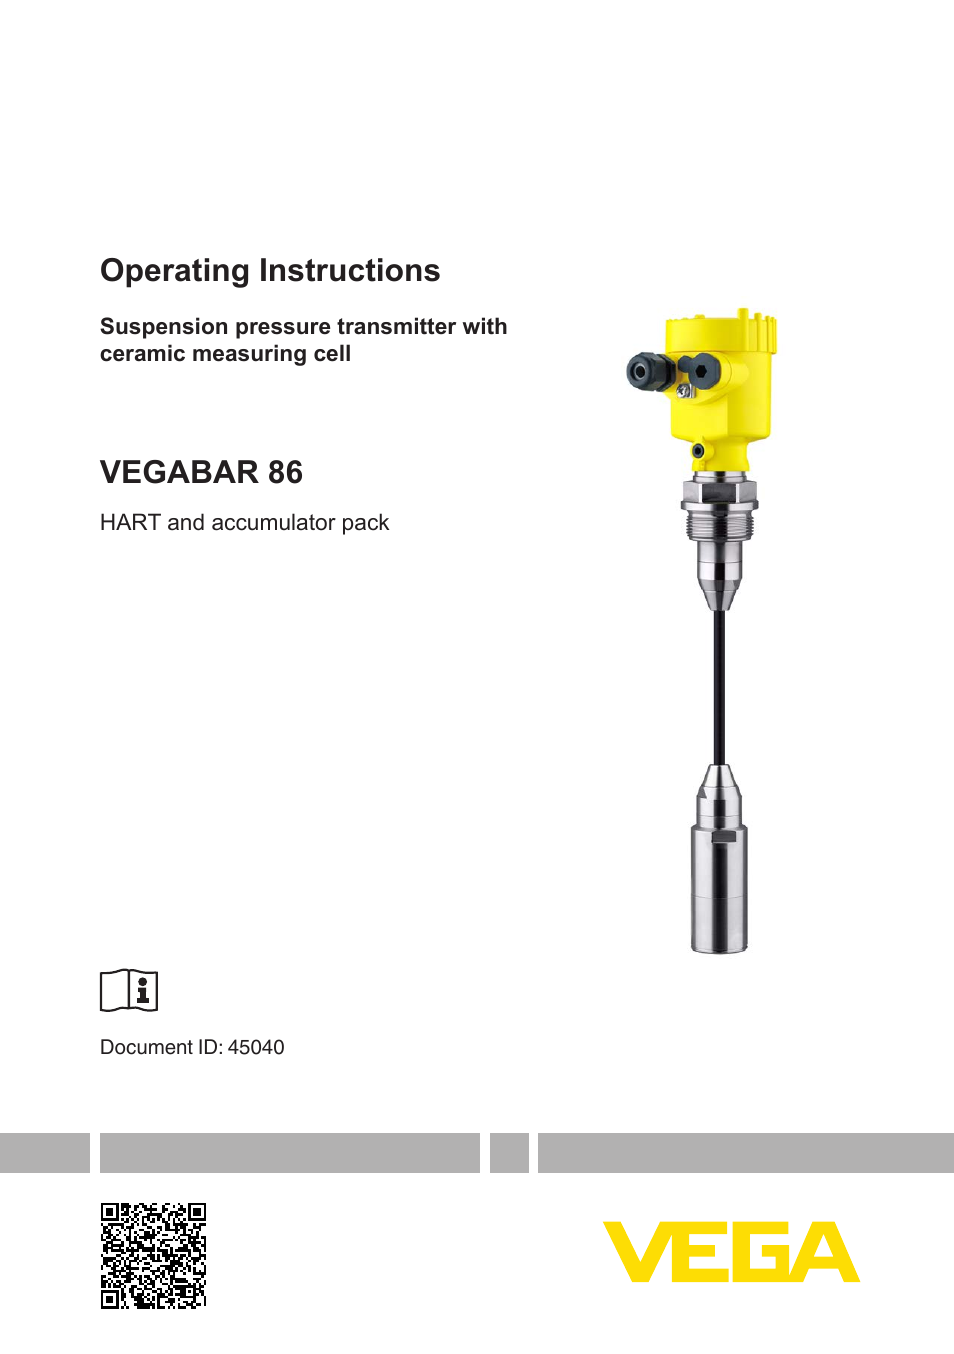 VEGABAR 86 HART and accumulator pack - Operating Instructions